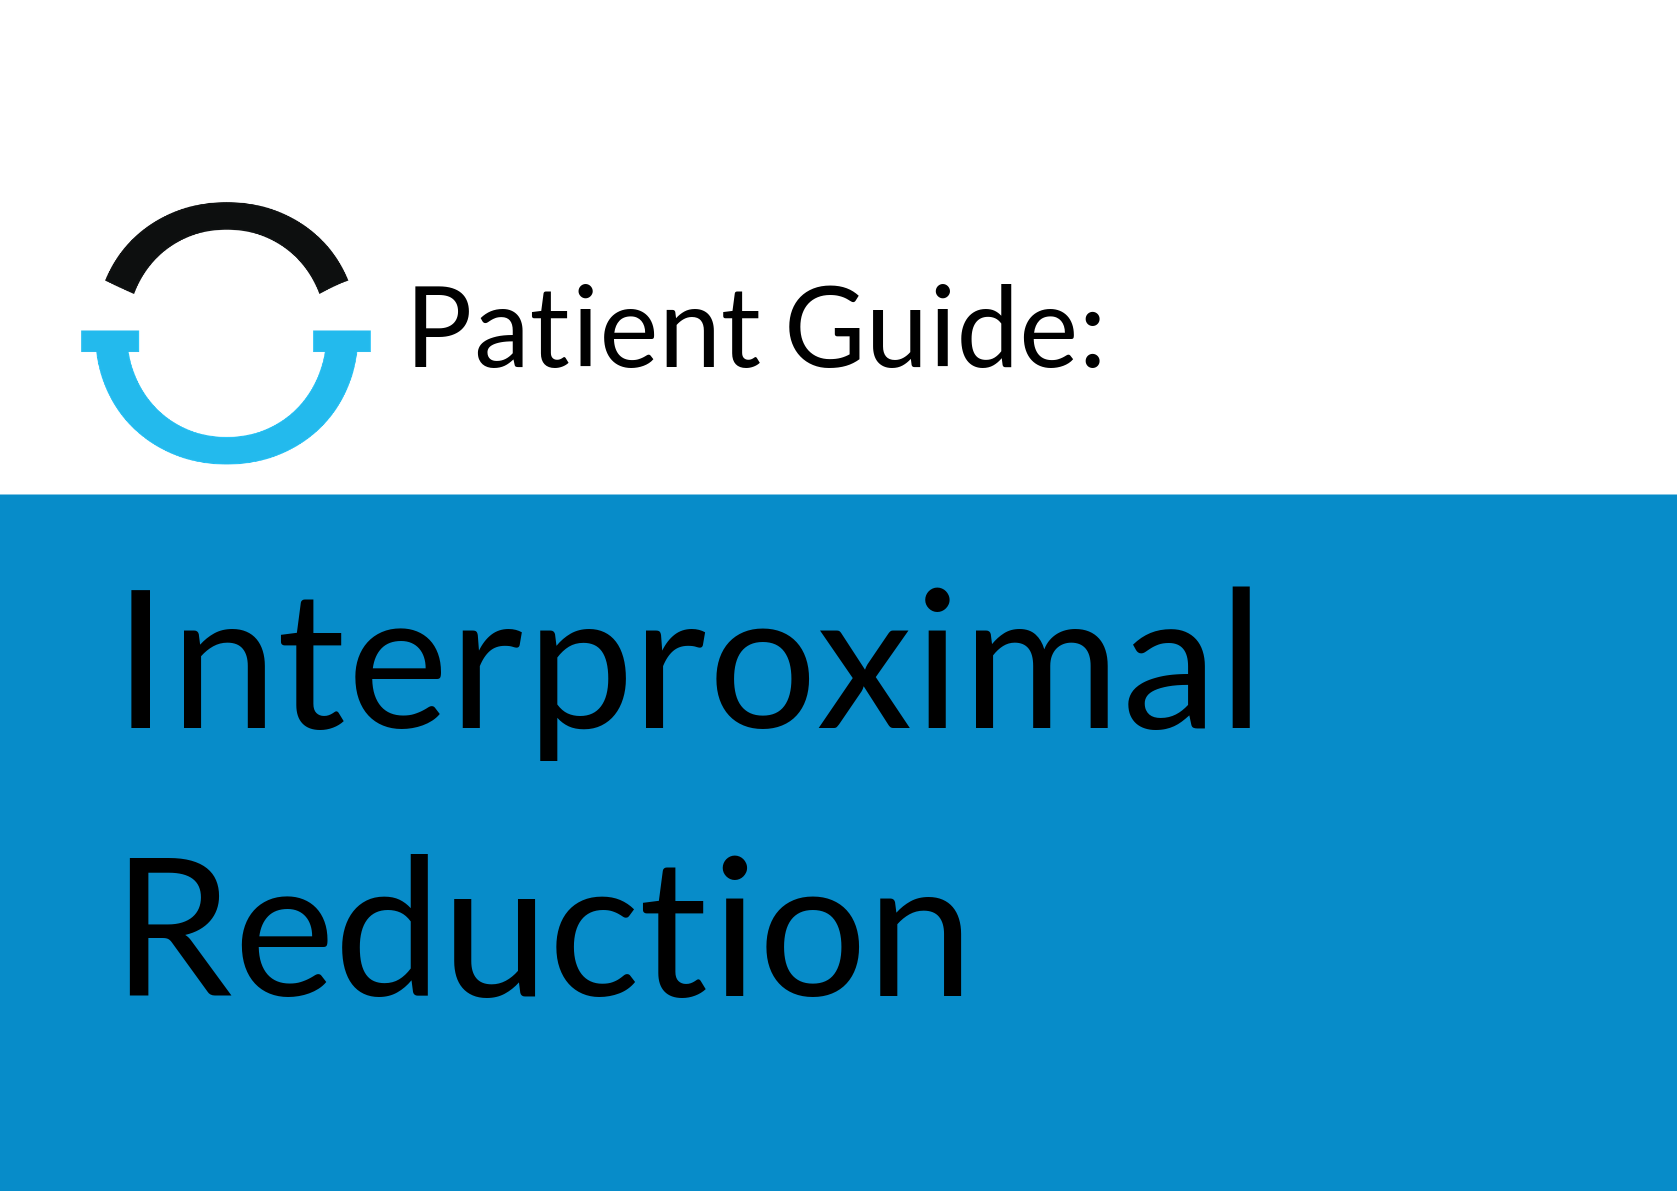 Patient Guide Header Image – Interproximal Reduction LARGE